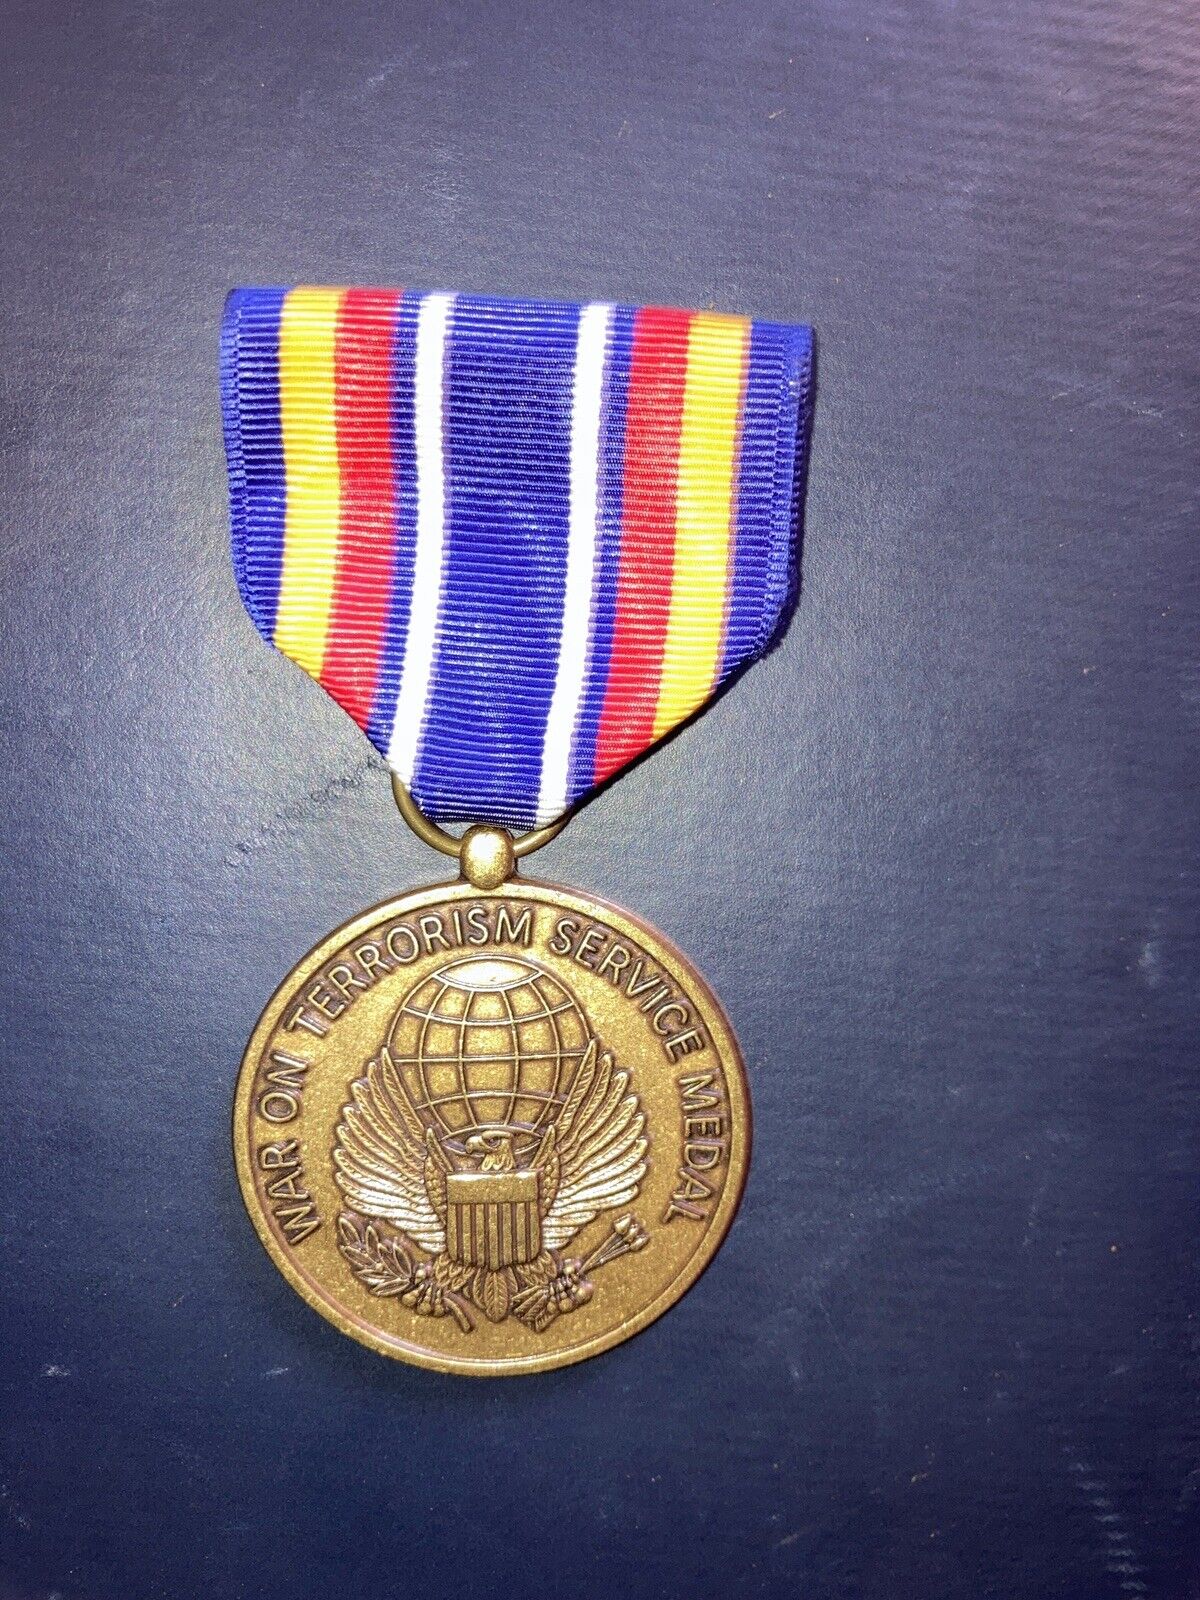 war on terrorism service medal